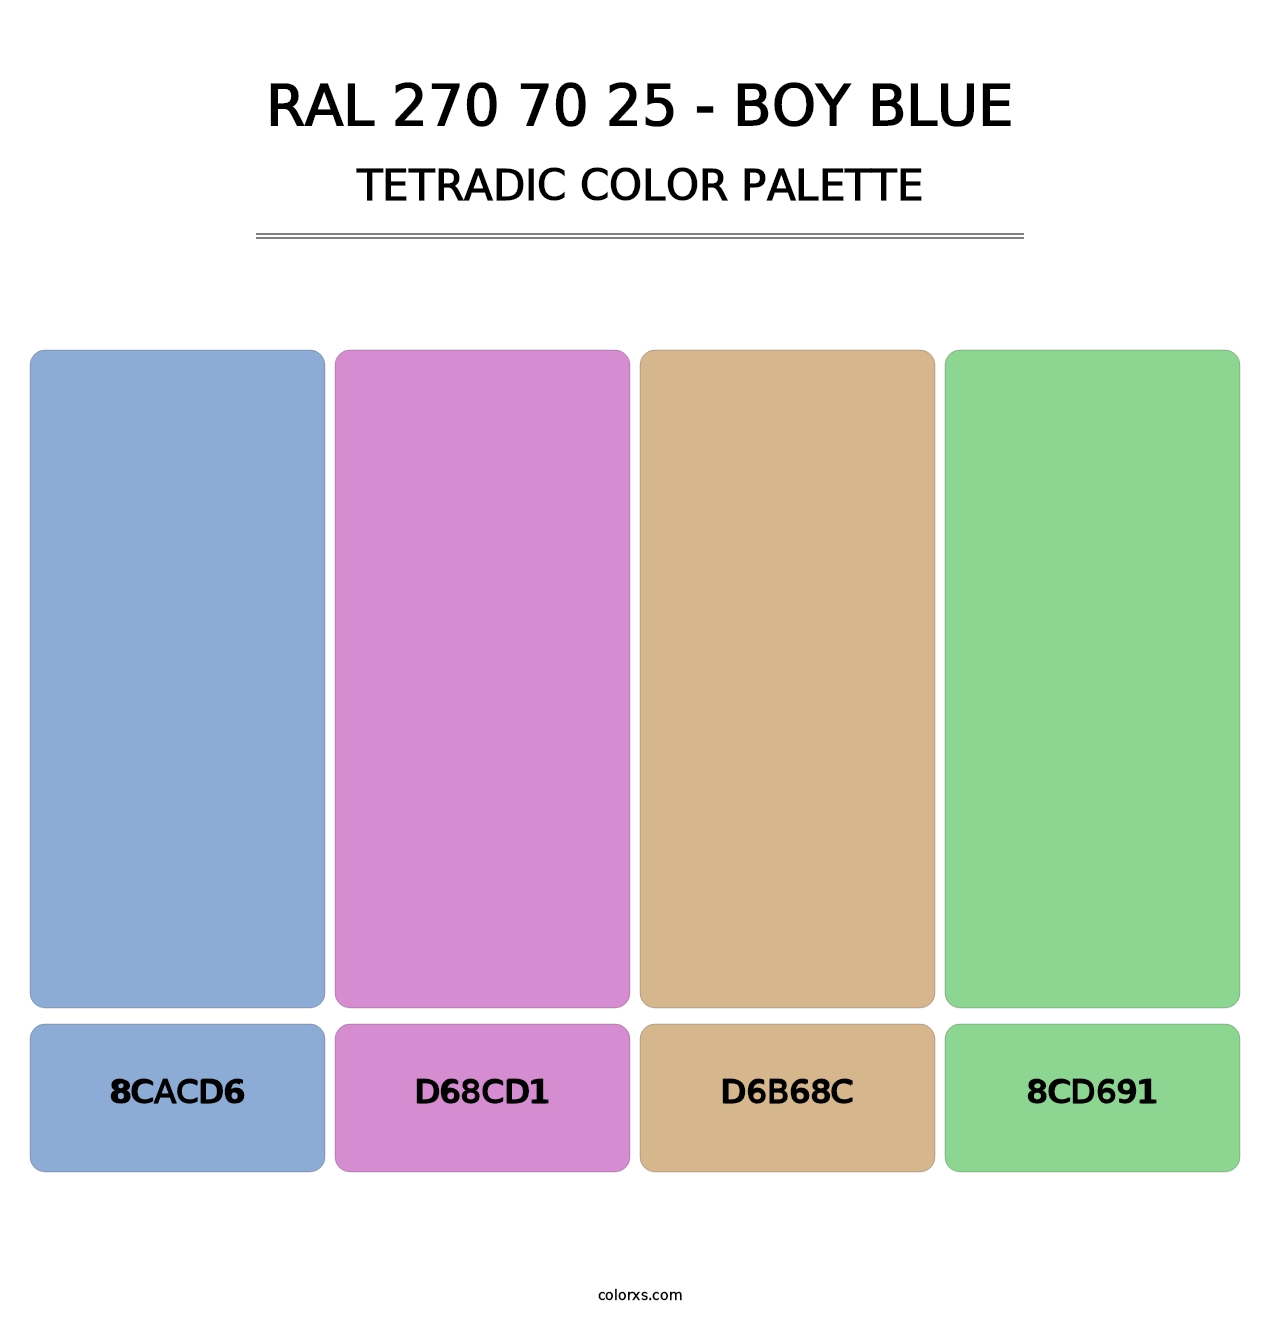 RAL 270 70 25 - Boy Blue - Tetradic Color Palette